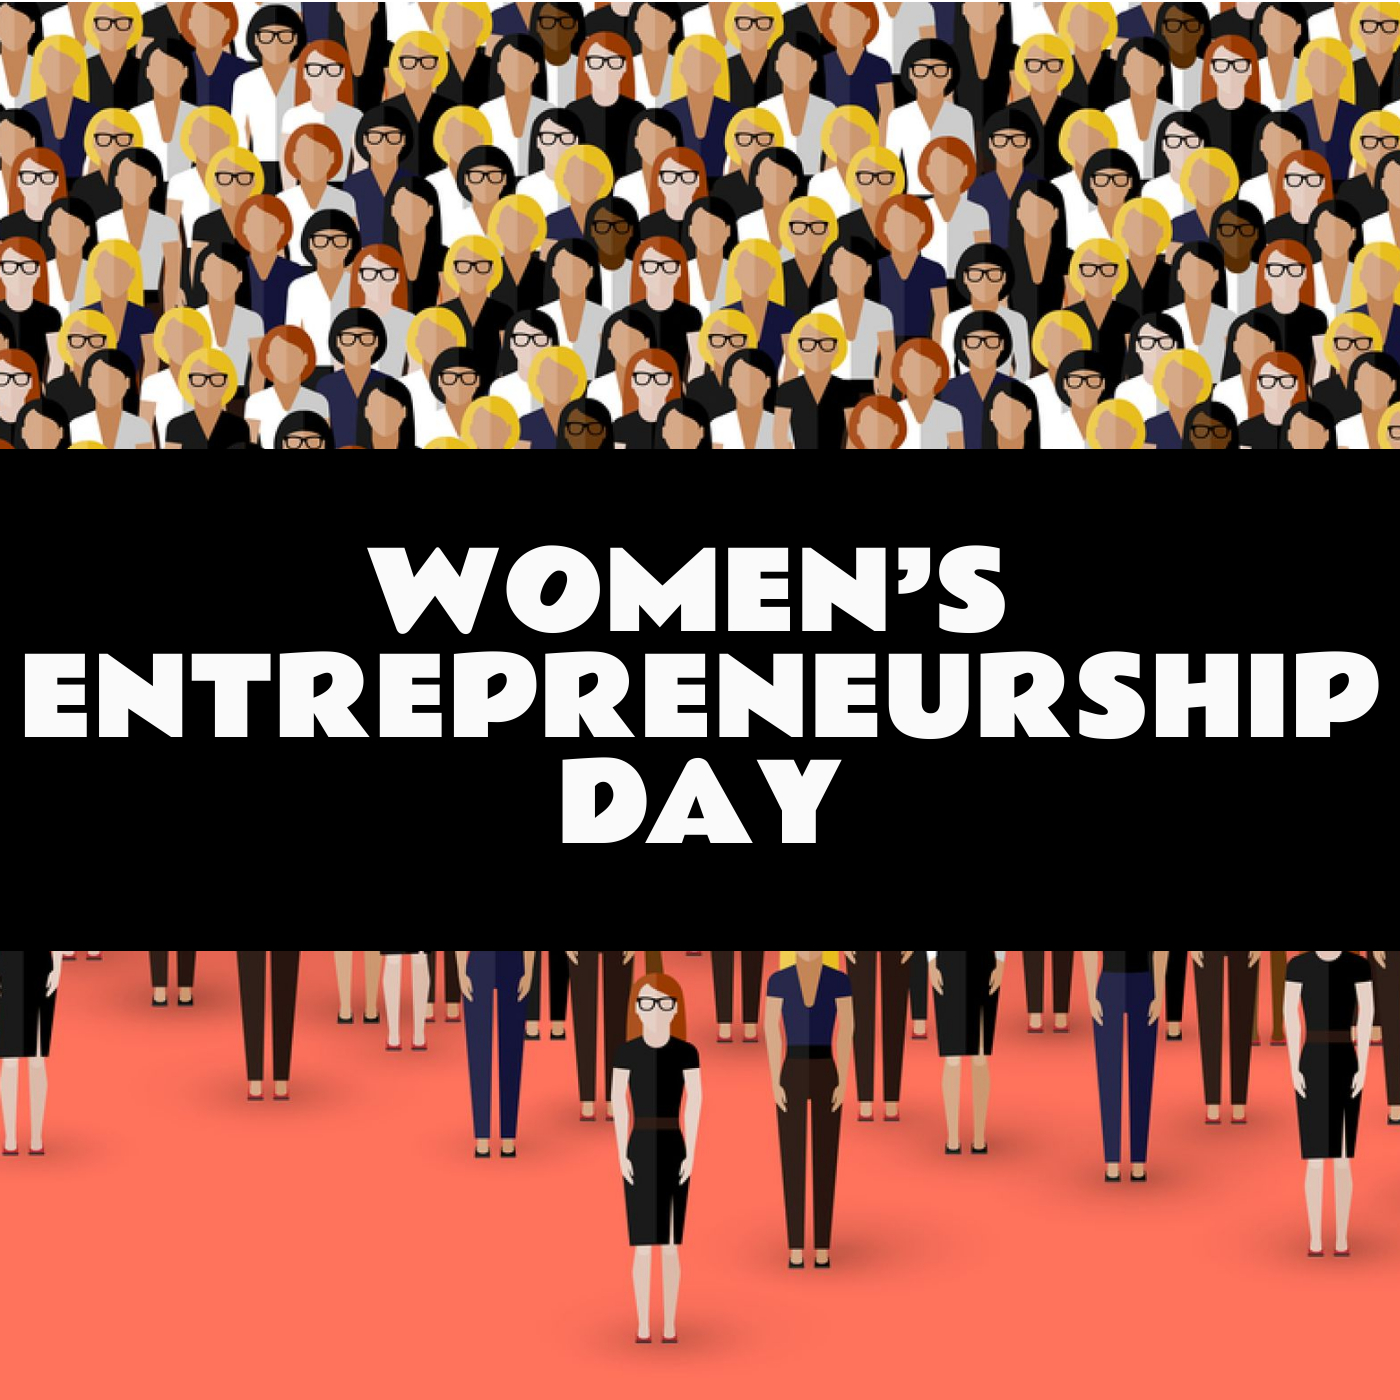 It’s Women’s Entrepreneurship Day. Meet The Risk-Taking Woman behind Inspiro Tequila